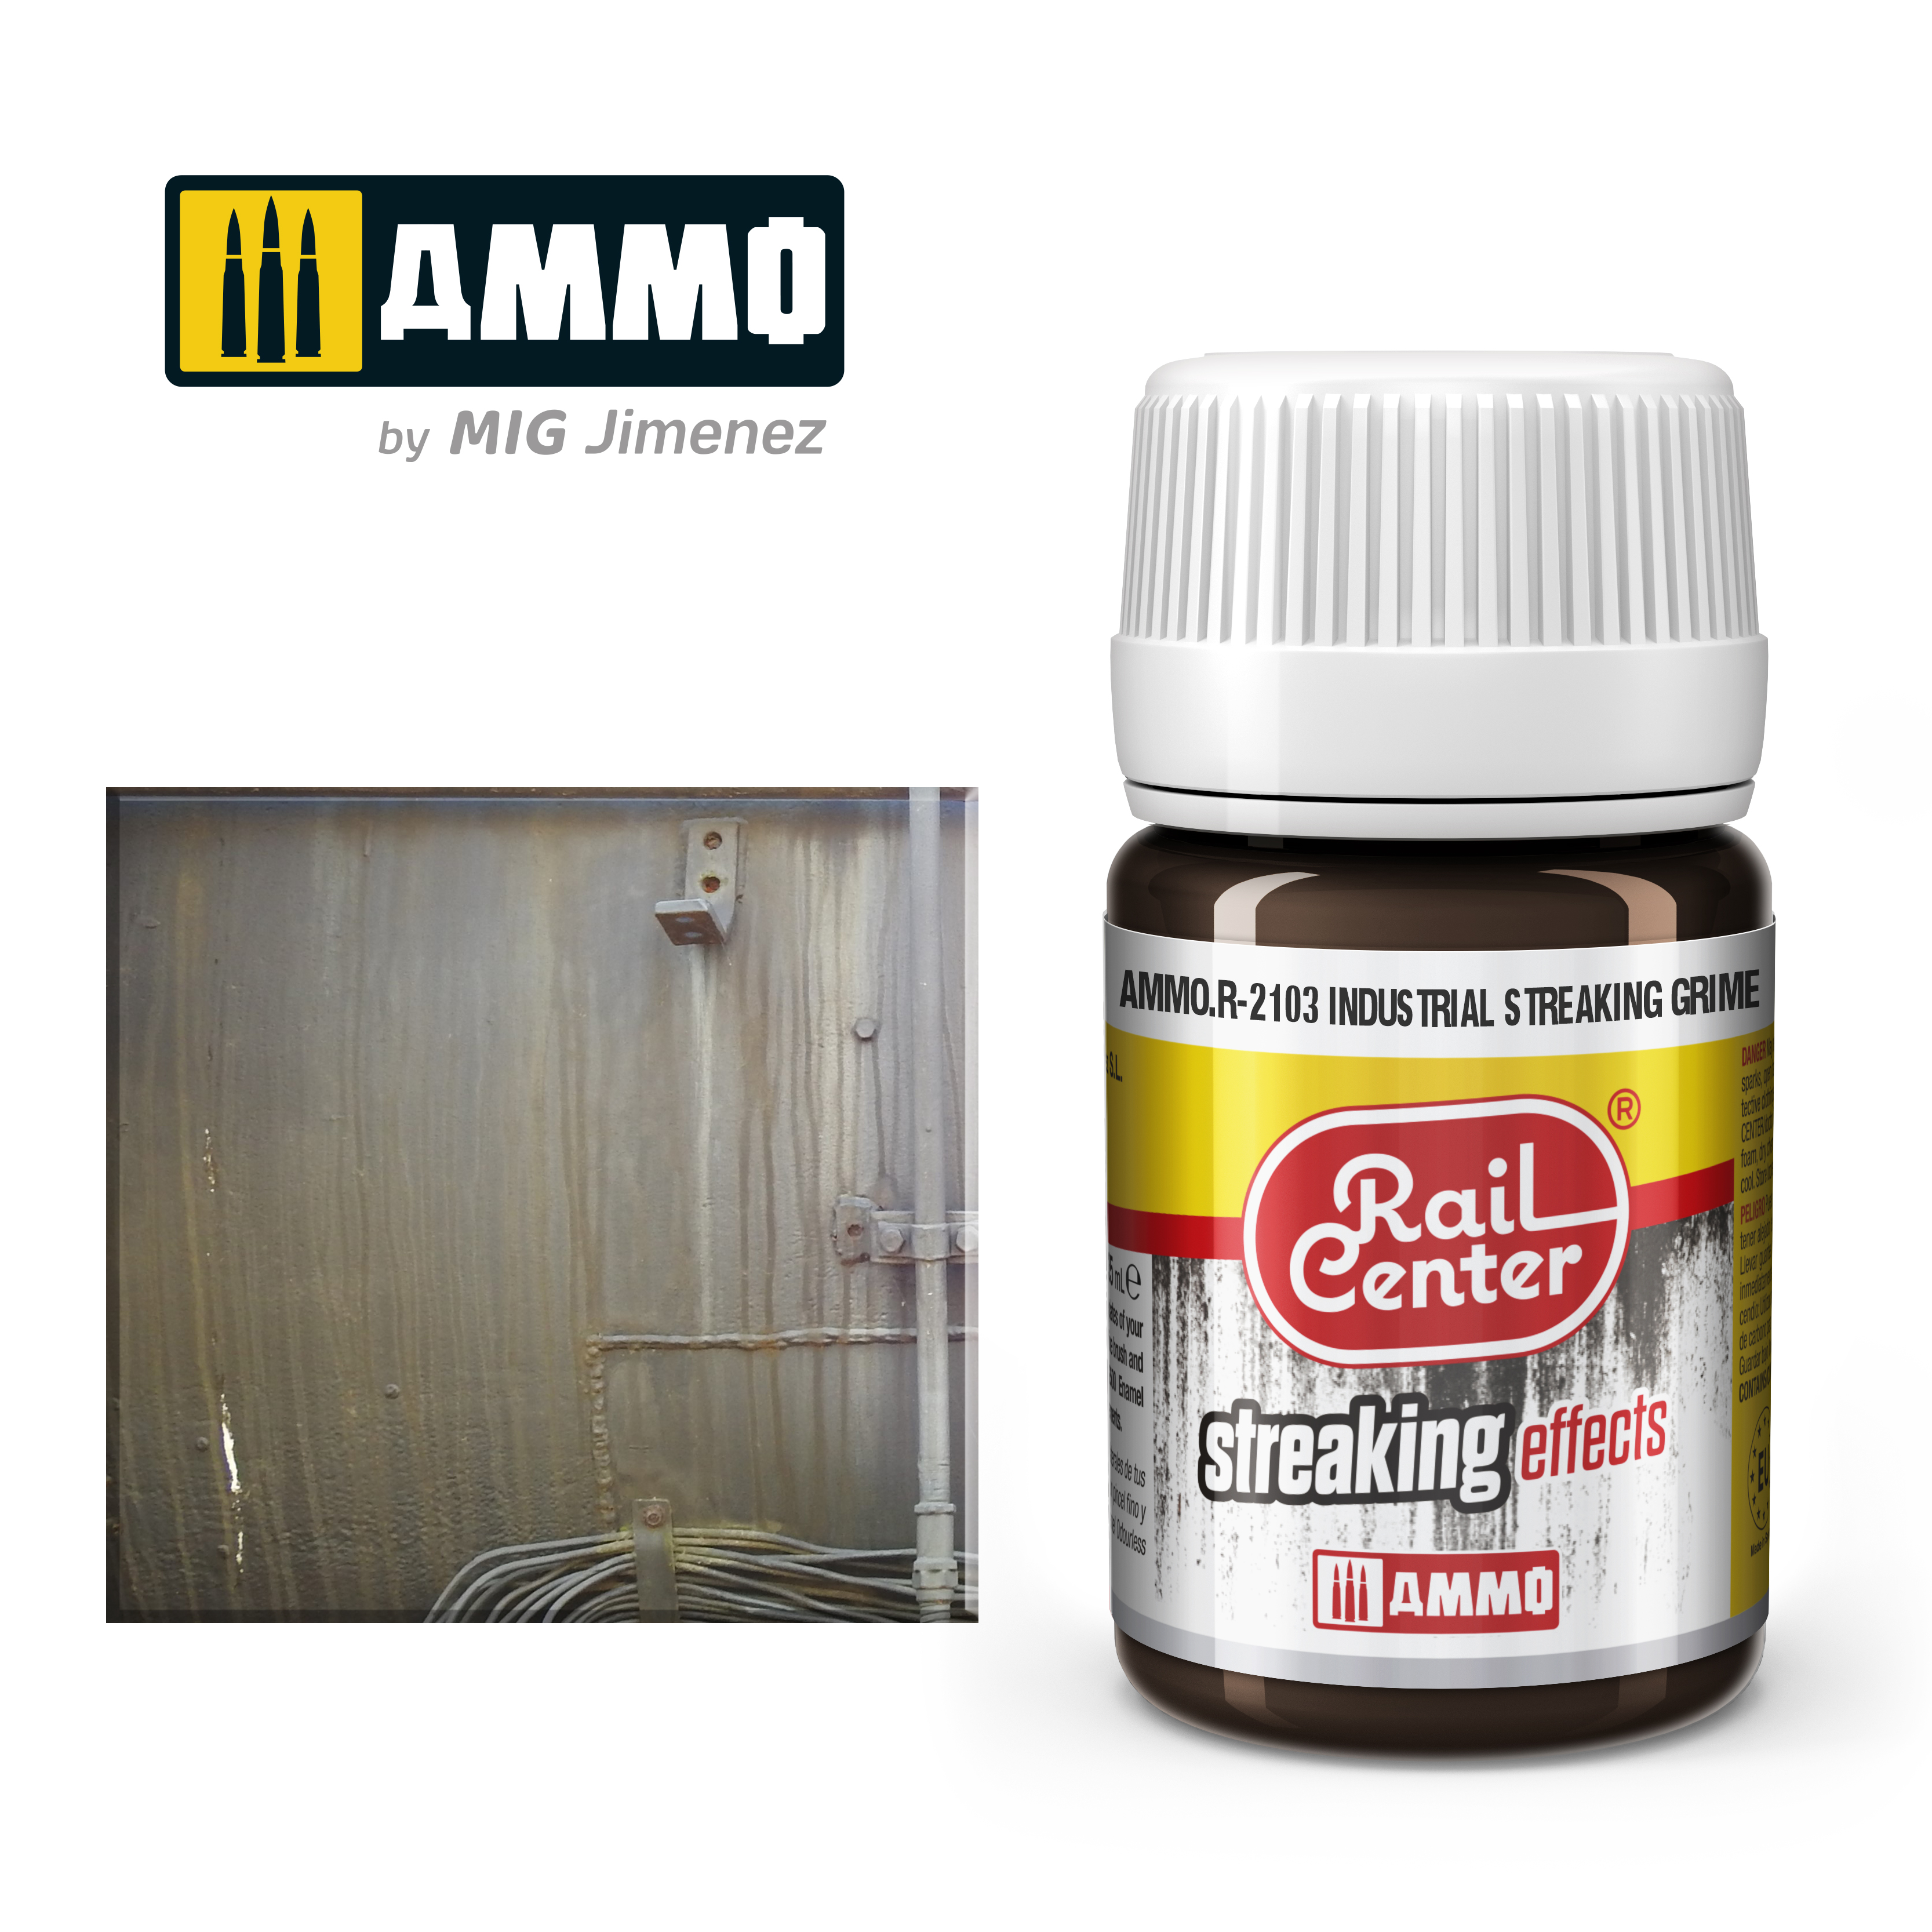 AMMO RailCenter Streaking Effects AMMO.R-2103 INDUSTRIAL STREAKING GRIME - 35ml Bottle